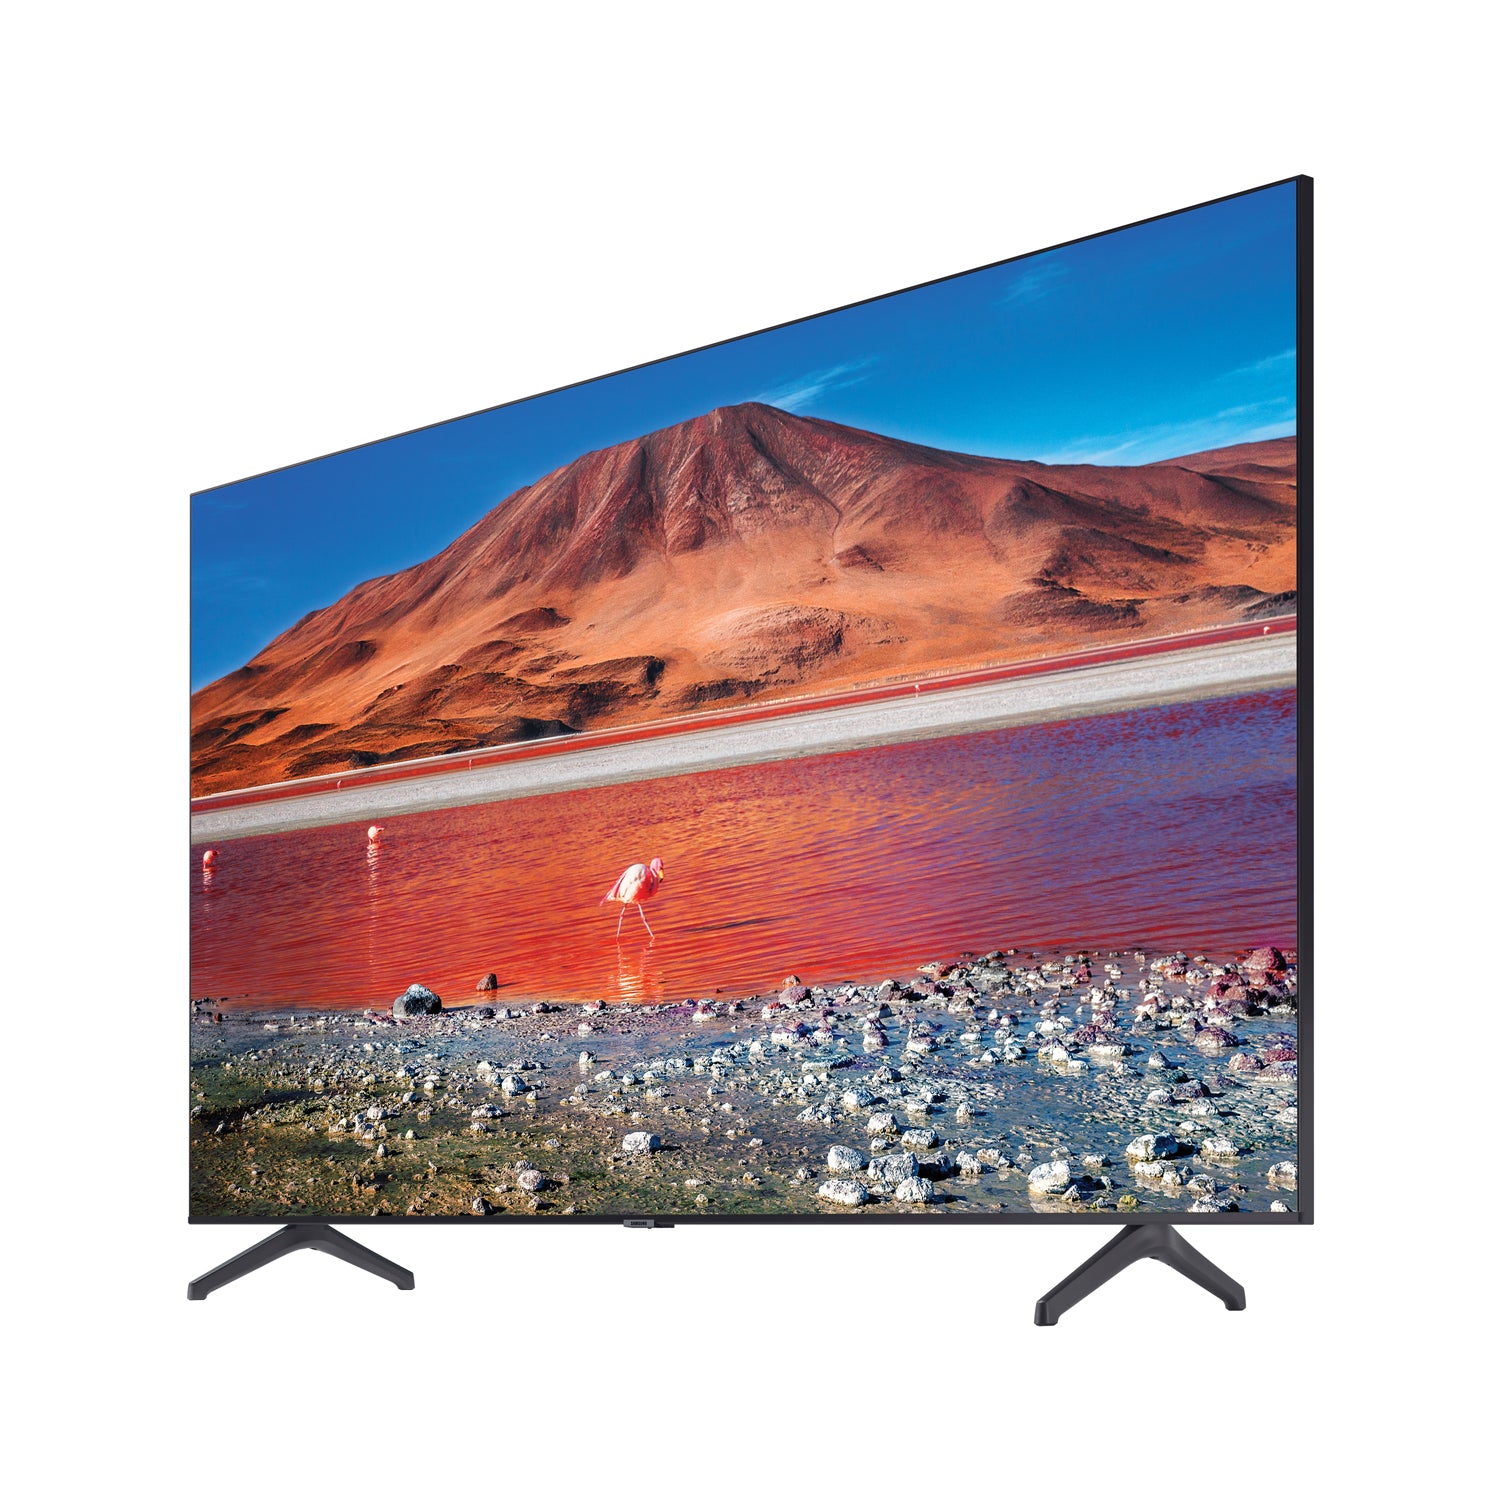 65-inch LED 4K UHD Smart TV